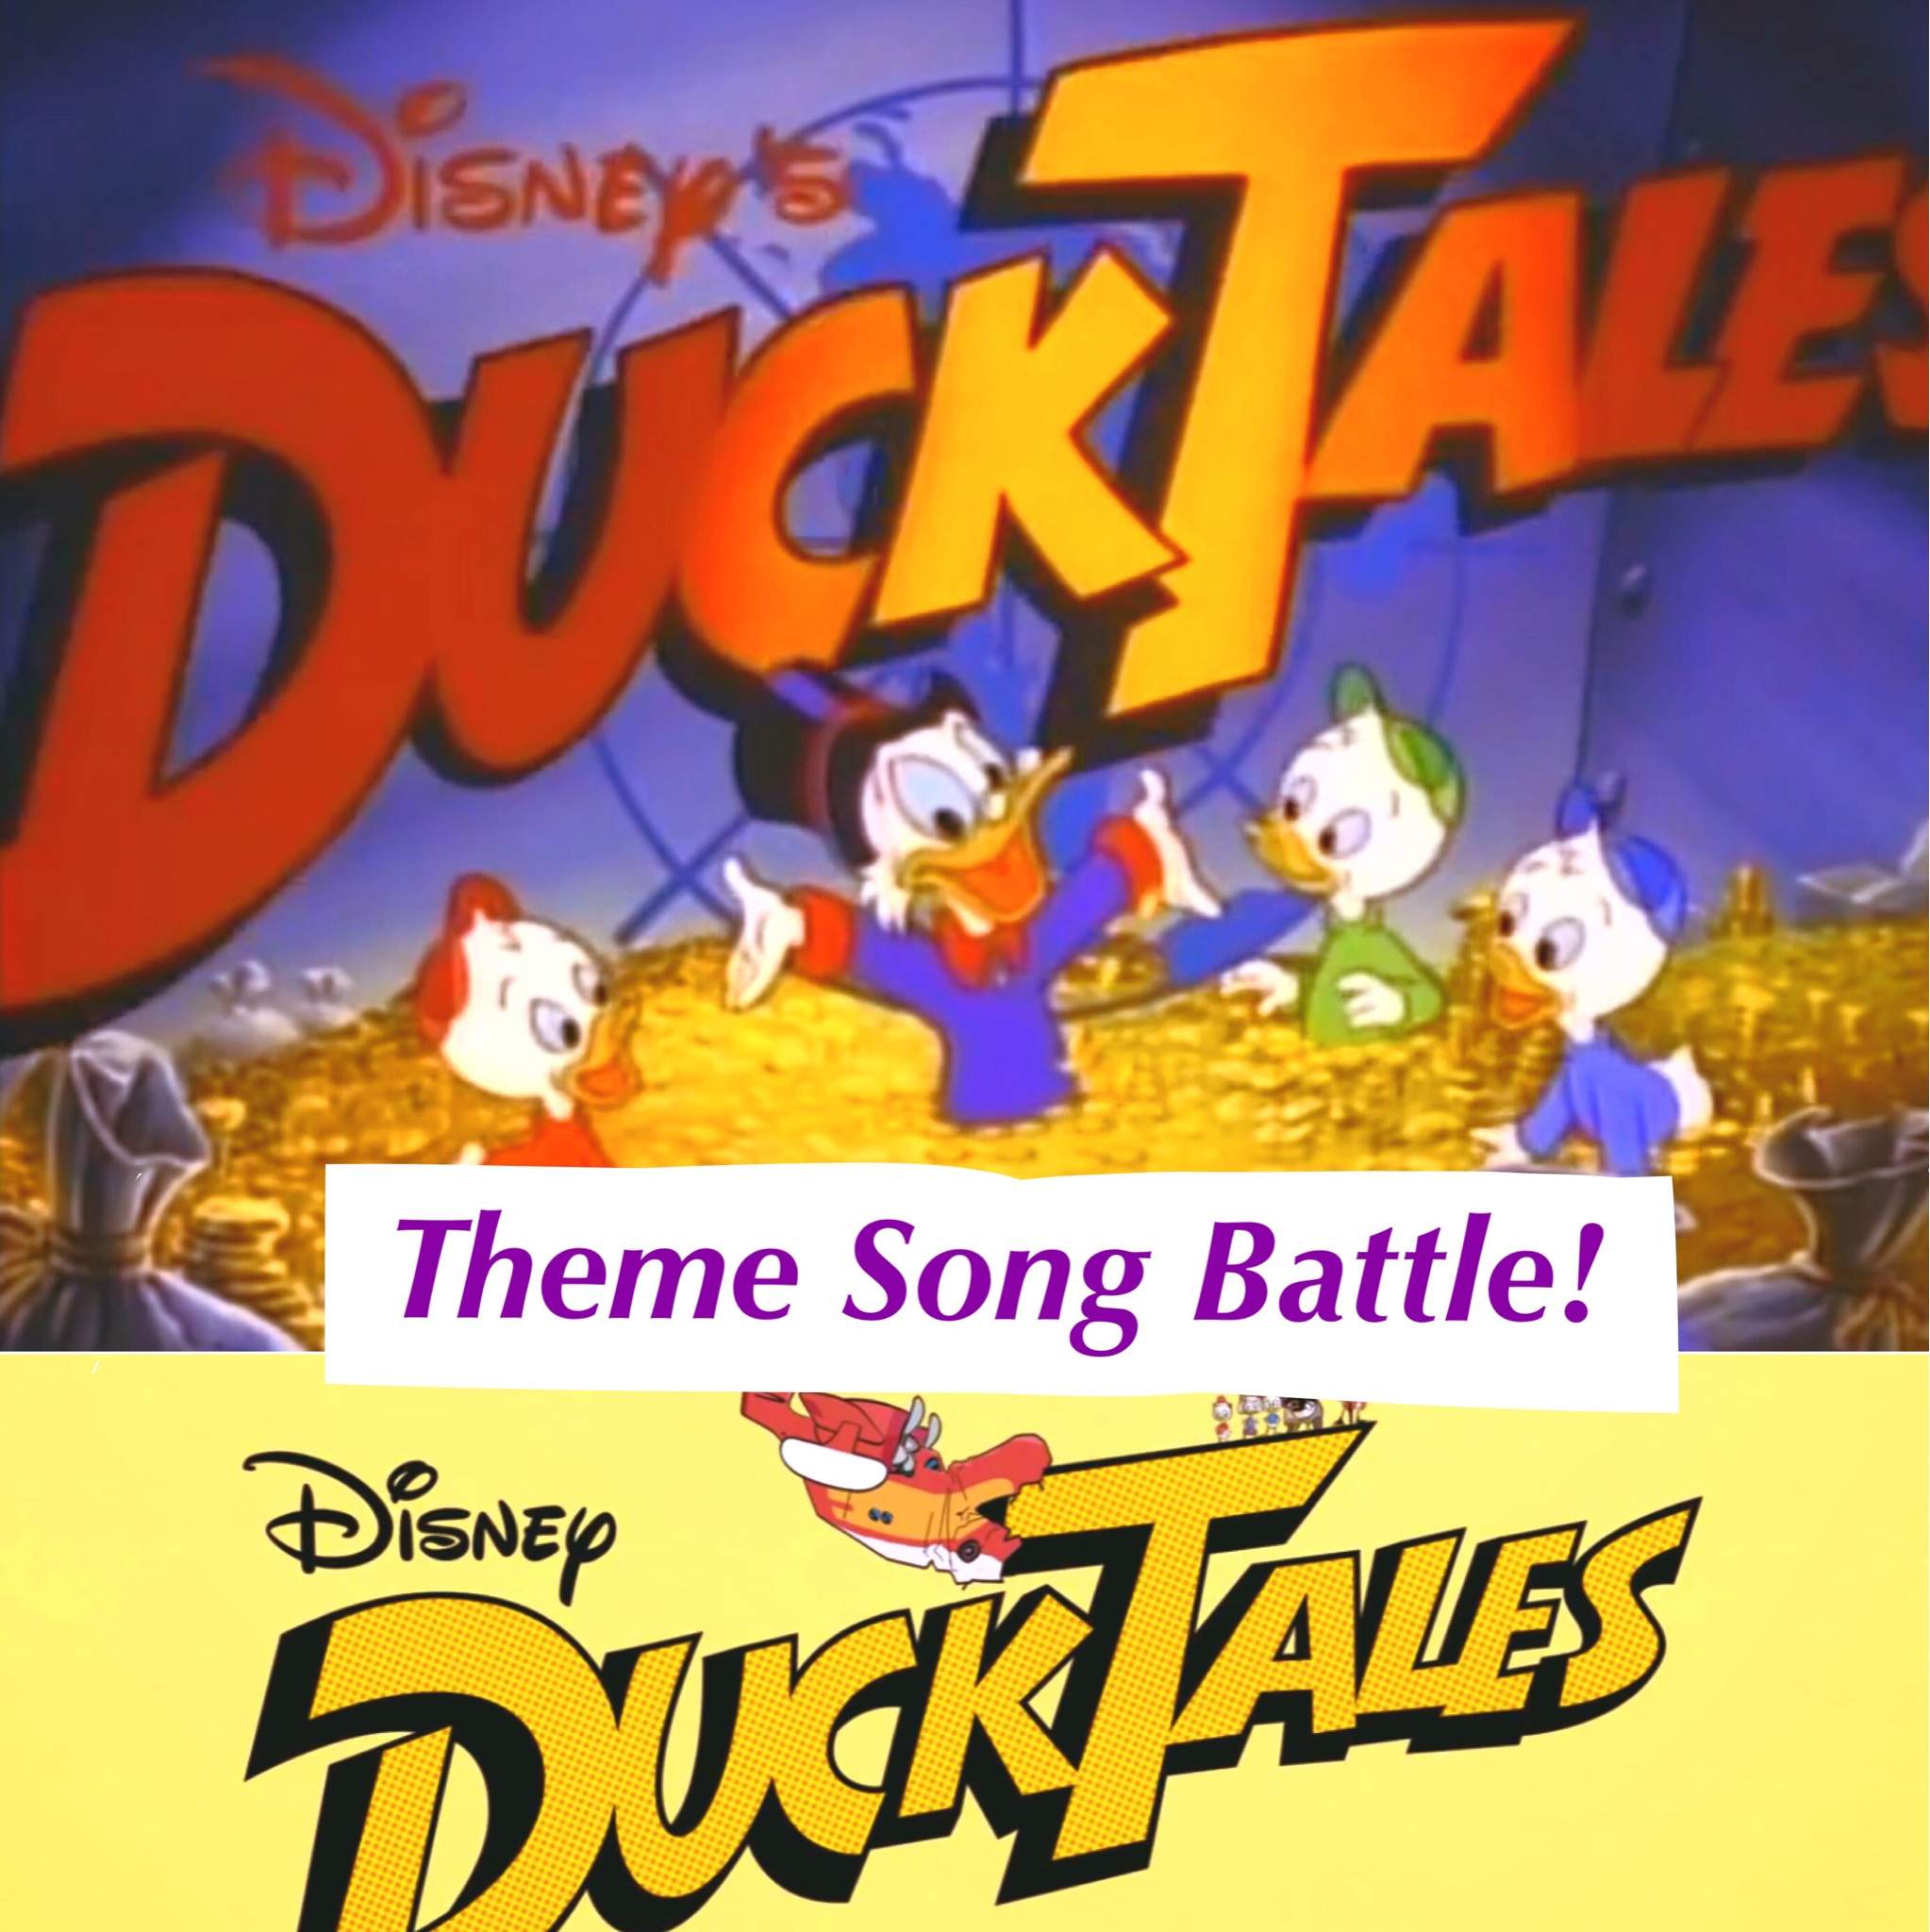 klyka talks about ducktales theme song